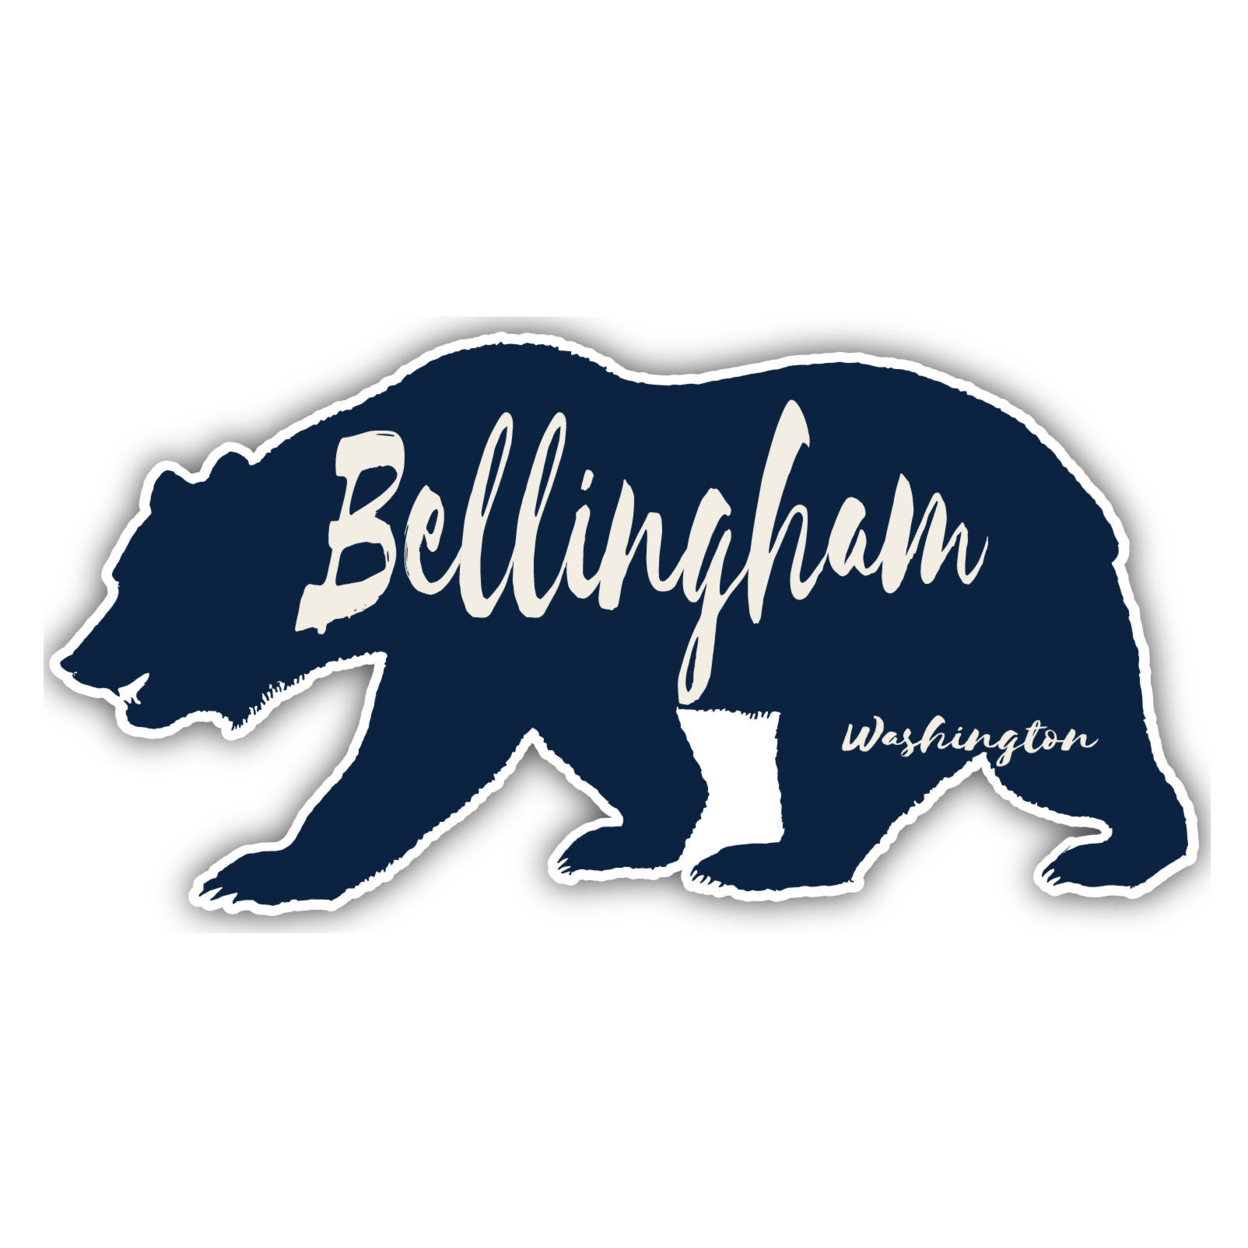 Bellingham Washington Souvenir Decorative Stickers (Choose Theme And Size) - 4-Pack, 4-Inch, Bear